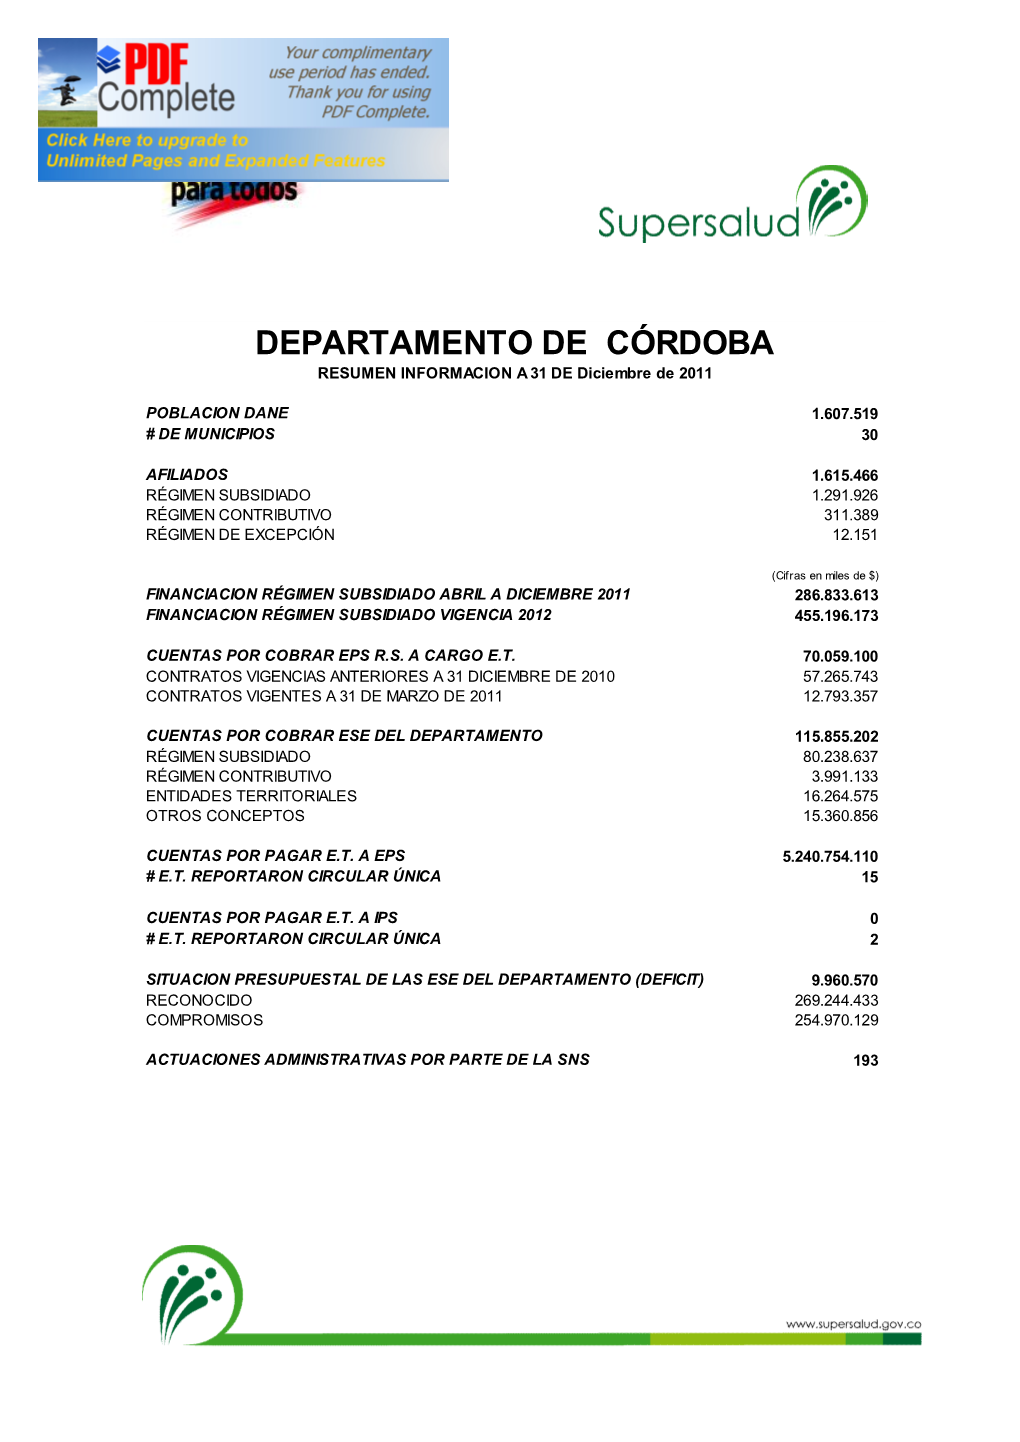 DEPARTAMENTO DE CÓRDOBA RESUMEN INFORMACION a 31 DE Diciembre De 2011